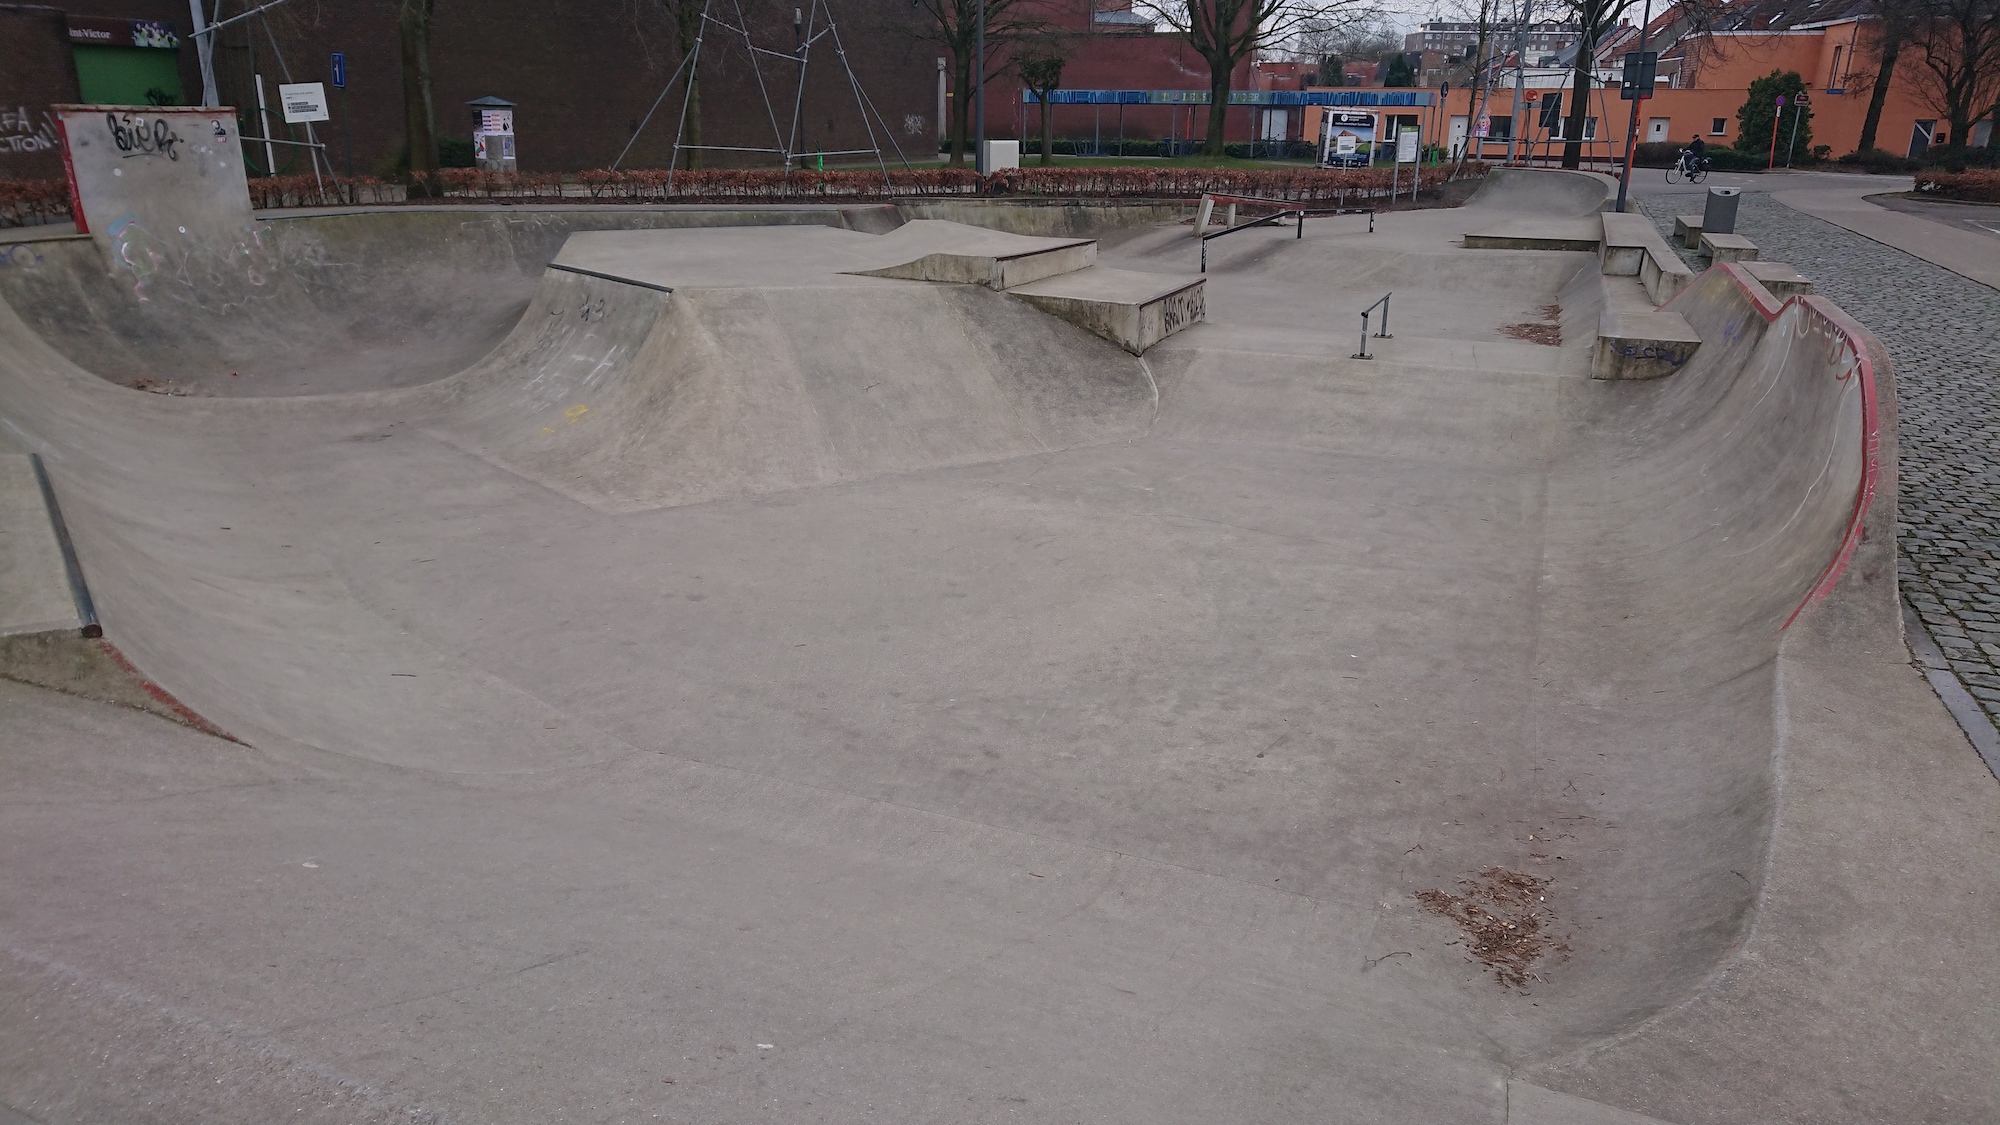 Turnhout Jailyard skatepark